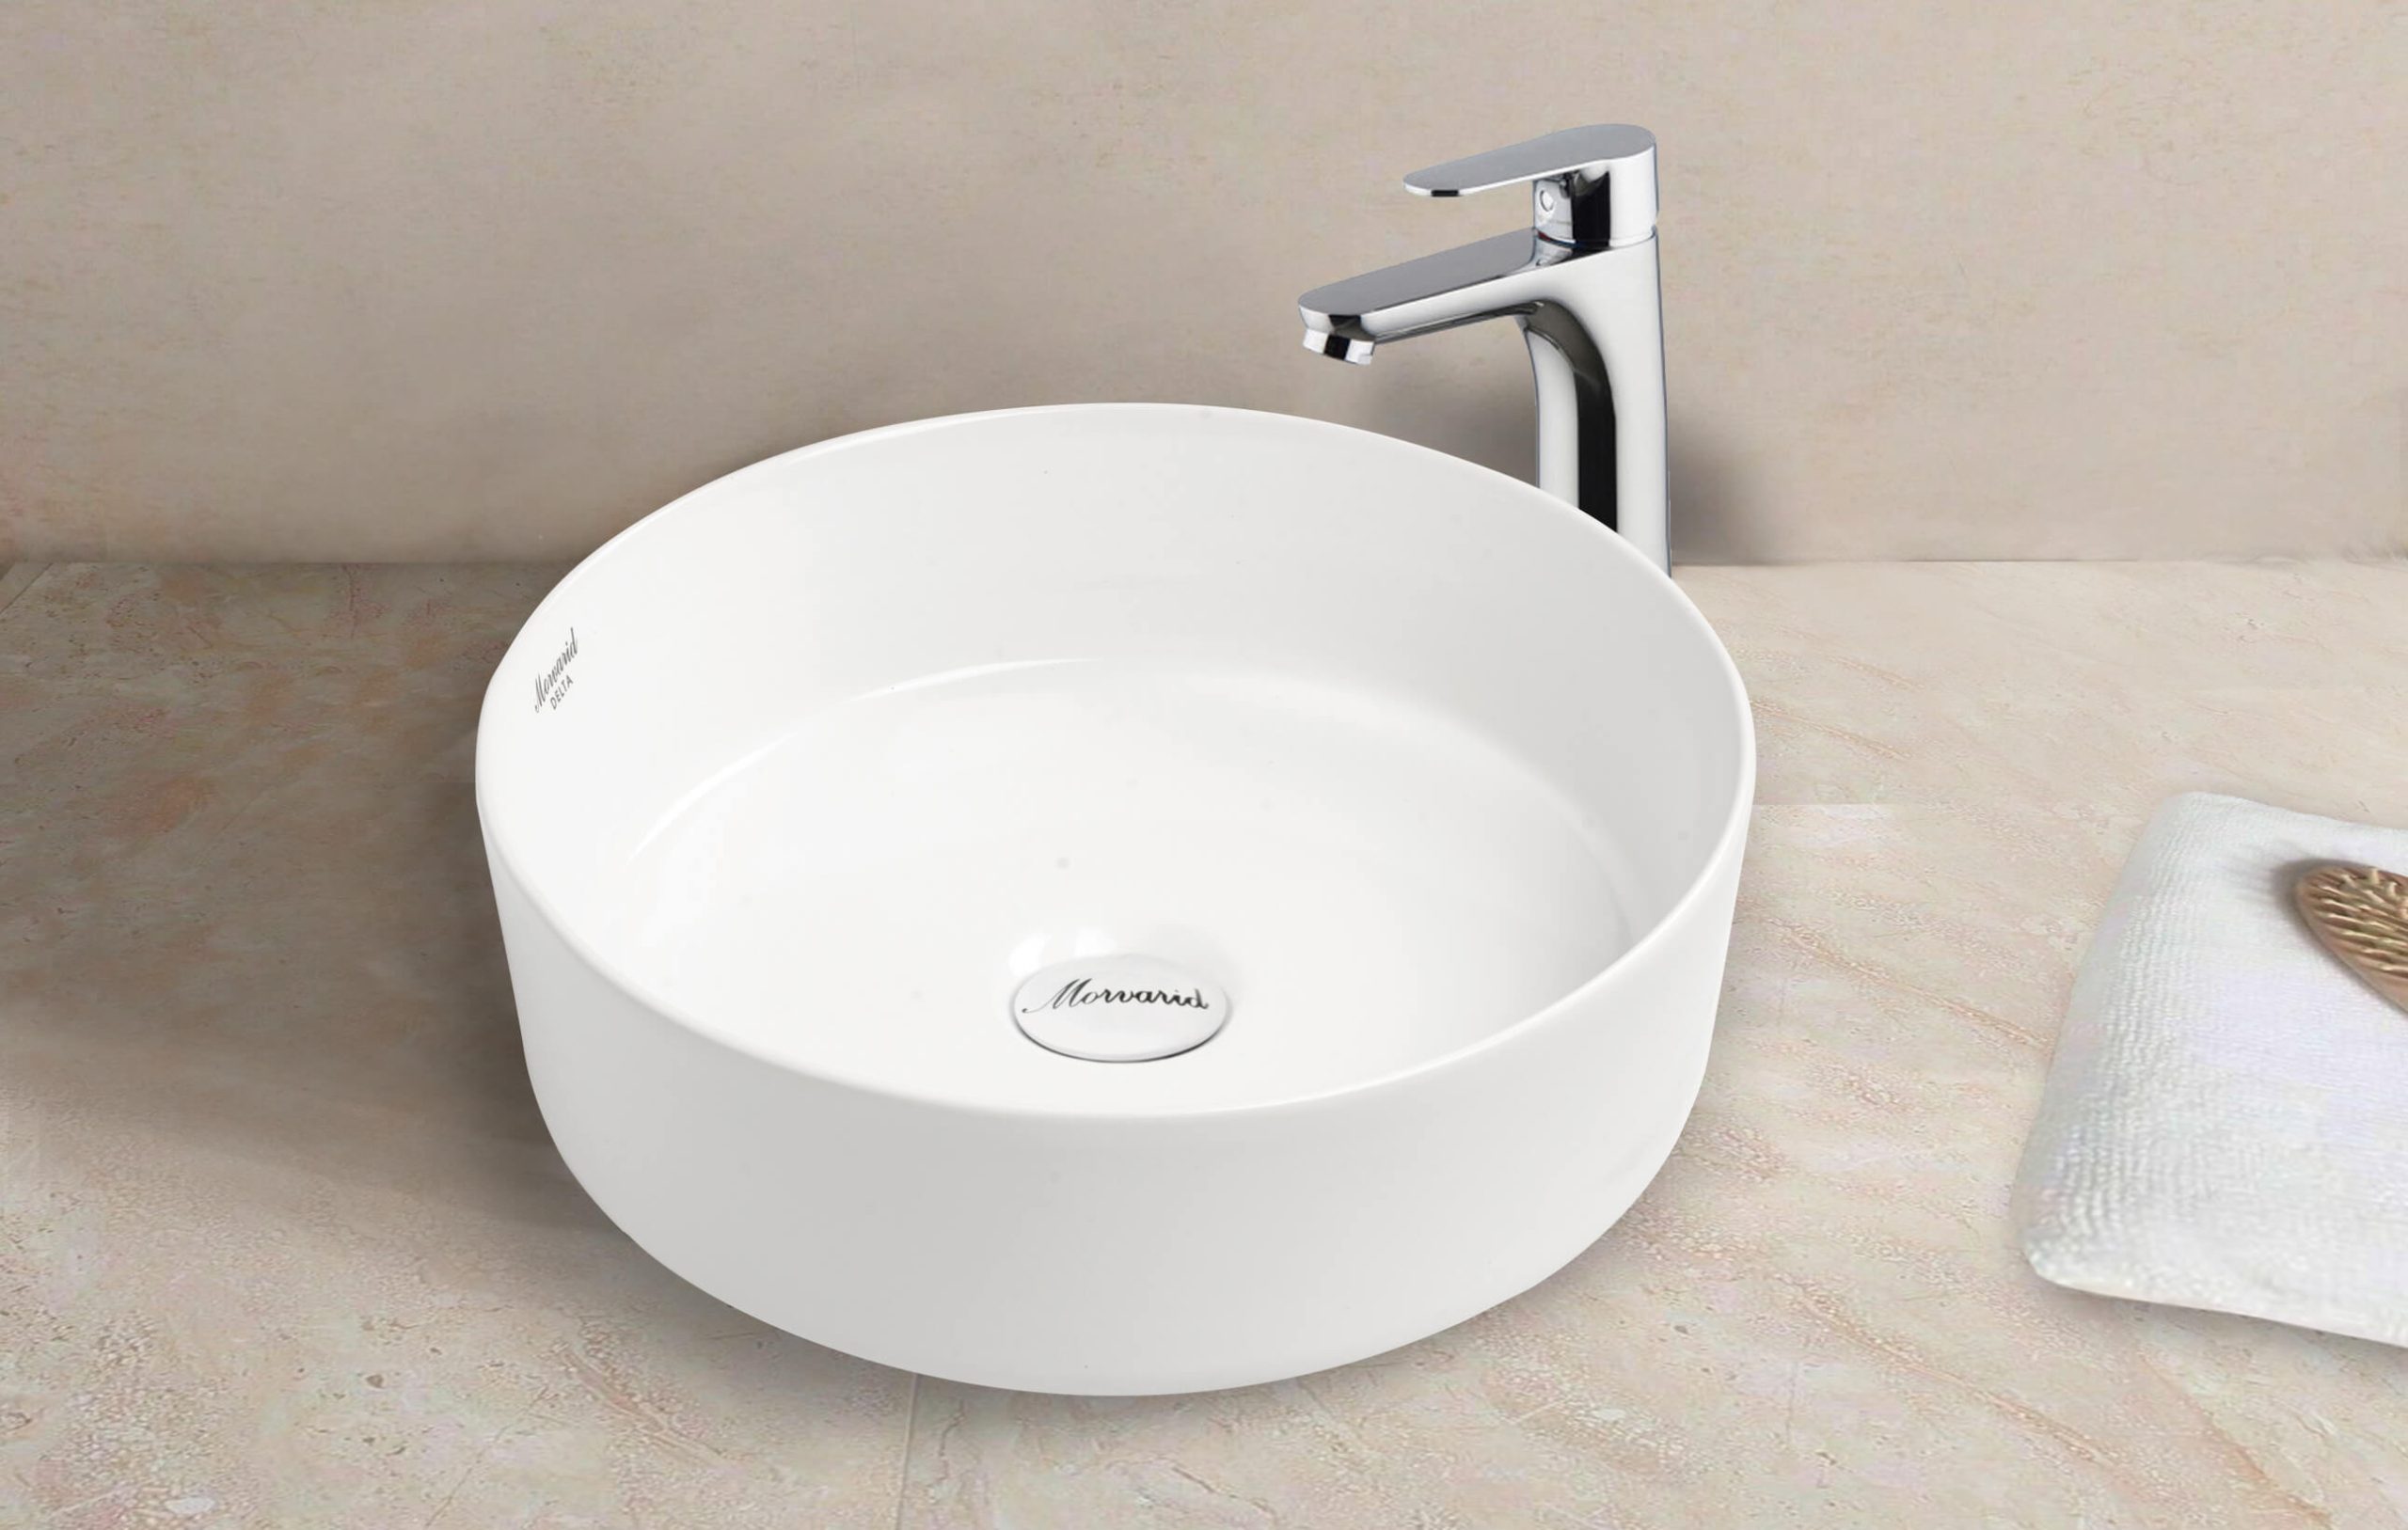 morvarid counter wash basin delta model 0 scaled - کاسه روشویی روکار مروارید مدل دلتا -  - drop-in-sinks